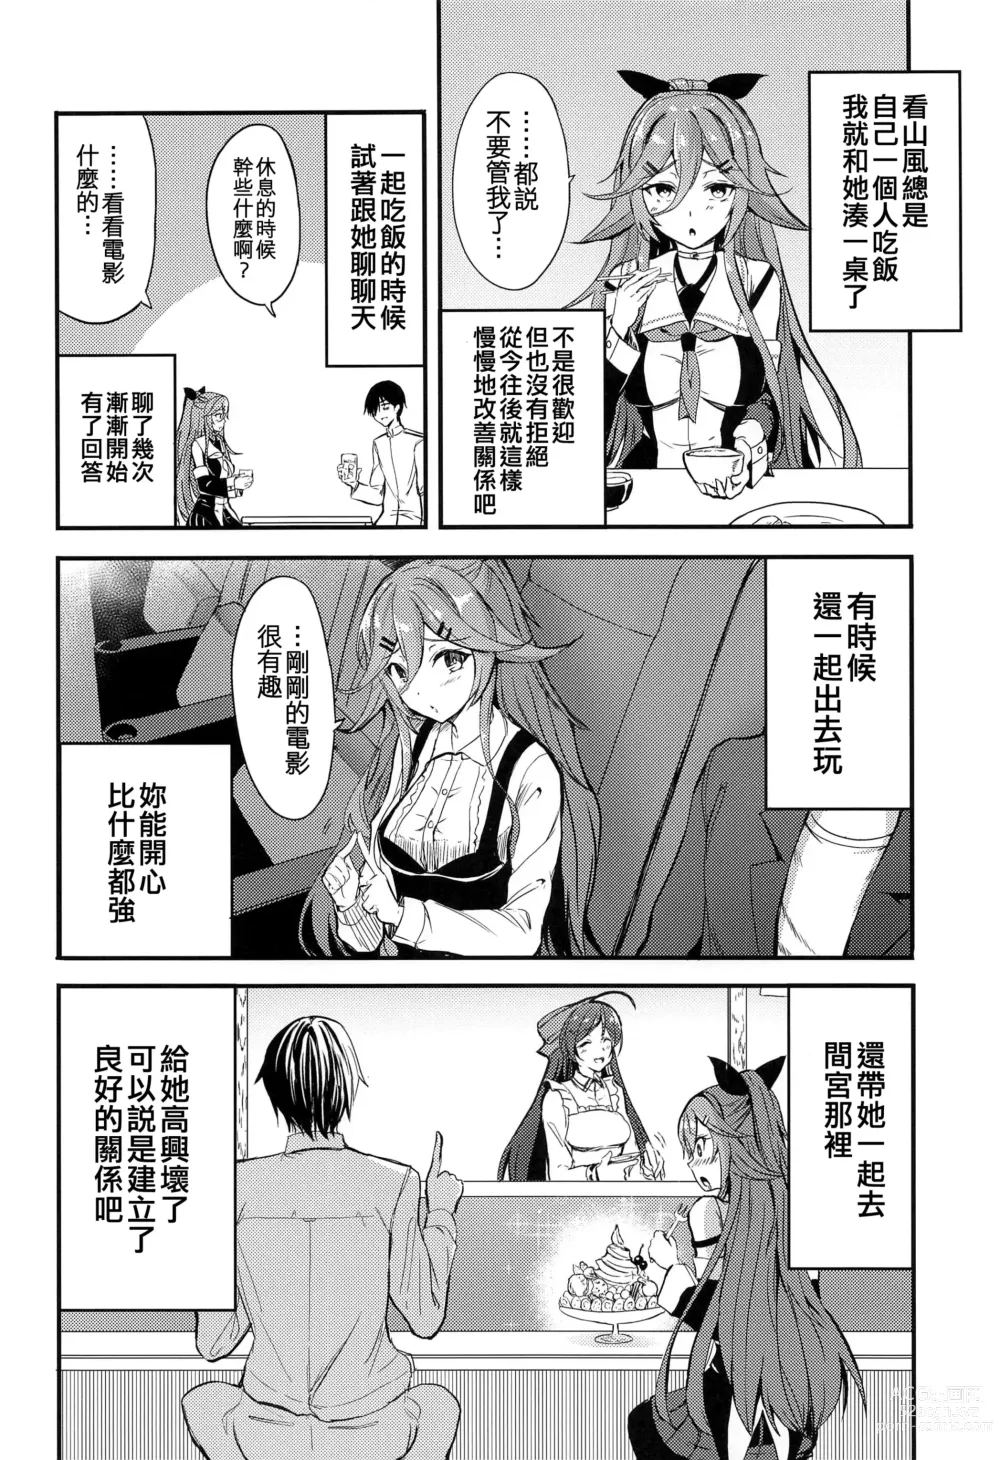 Page 4 of doujinshi Yamakaze to Nakayoku Naru made